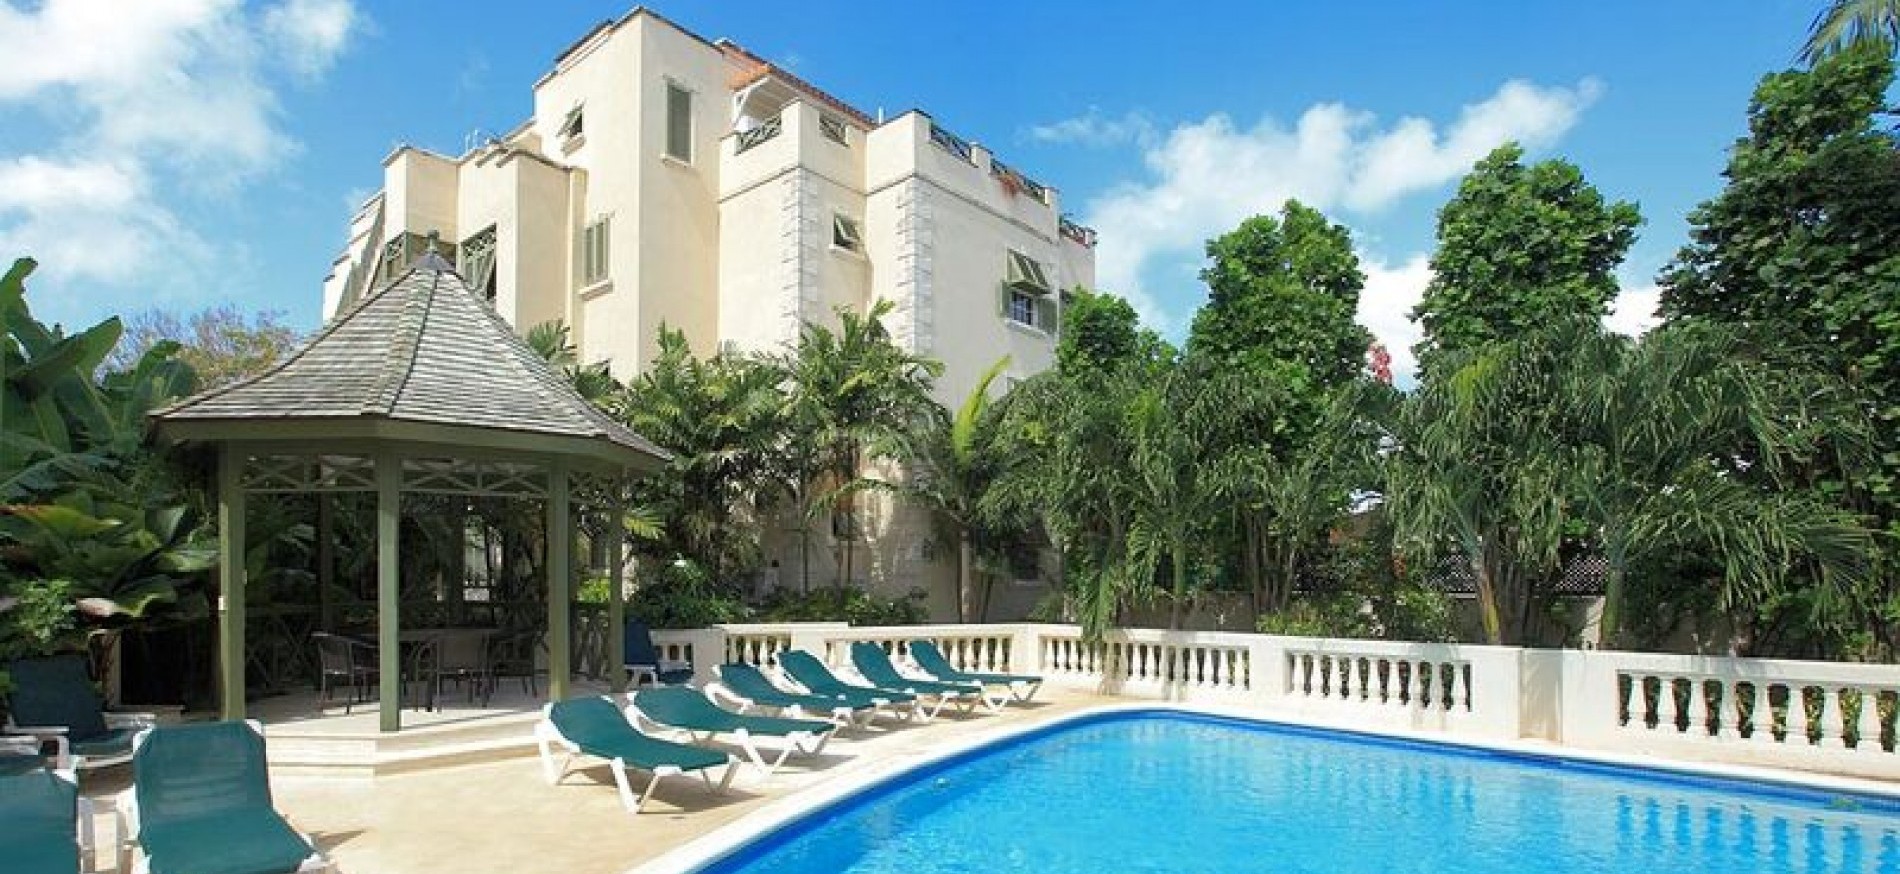 Summerland-201-St-James-Barbados-3-Bedrooms-Luxury-Villa